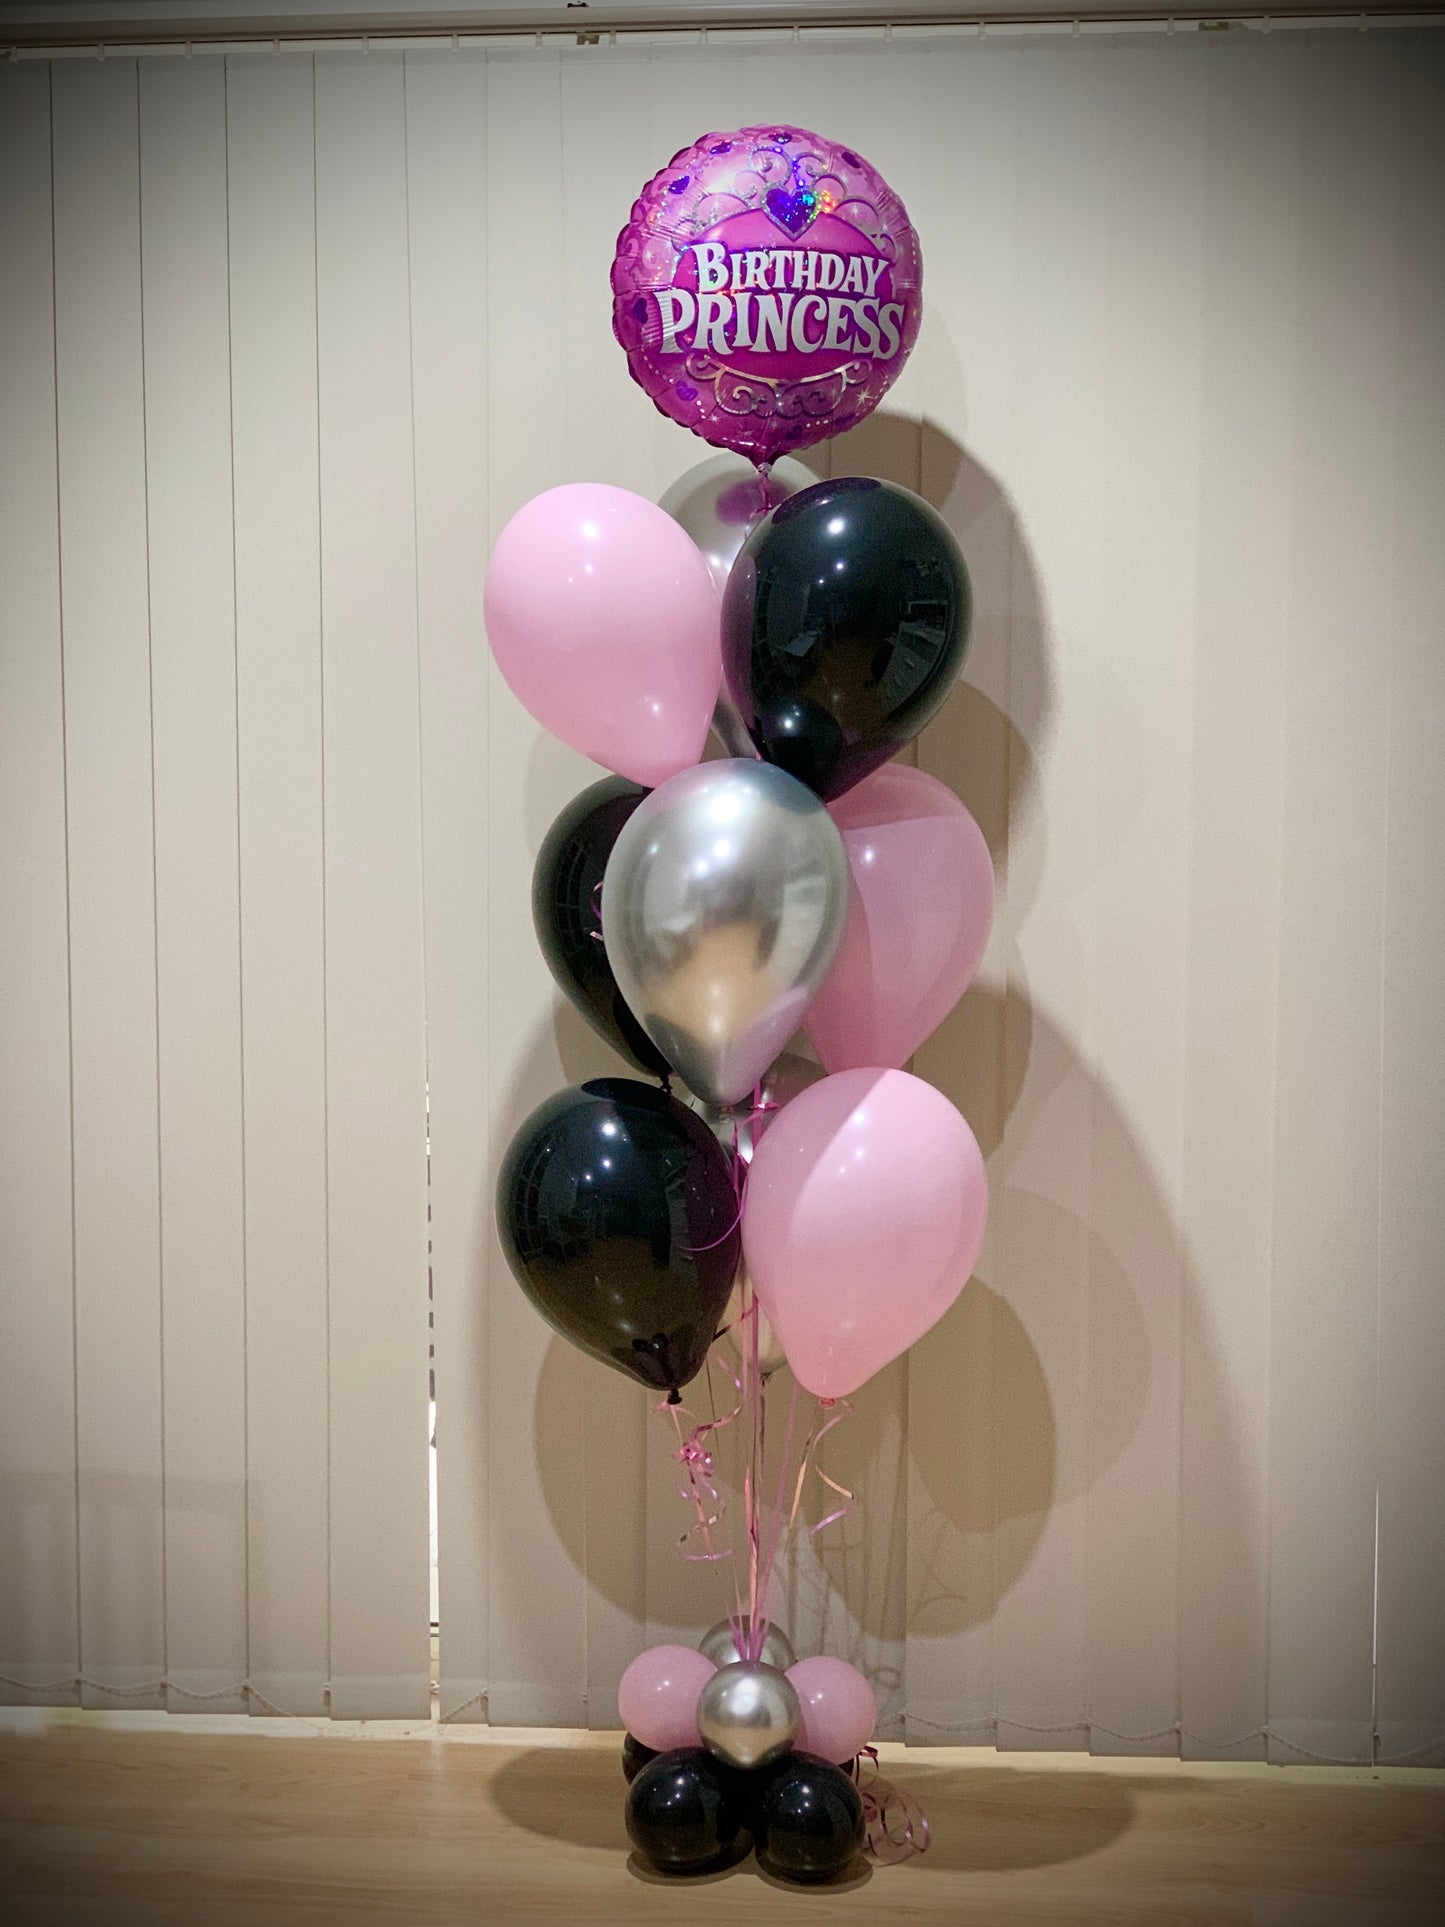 Birthday Princess Helium Balloons Bouquets